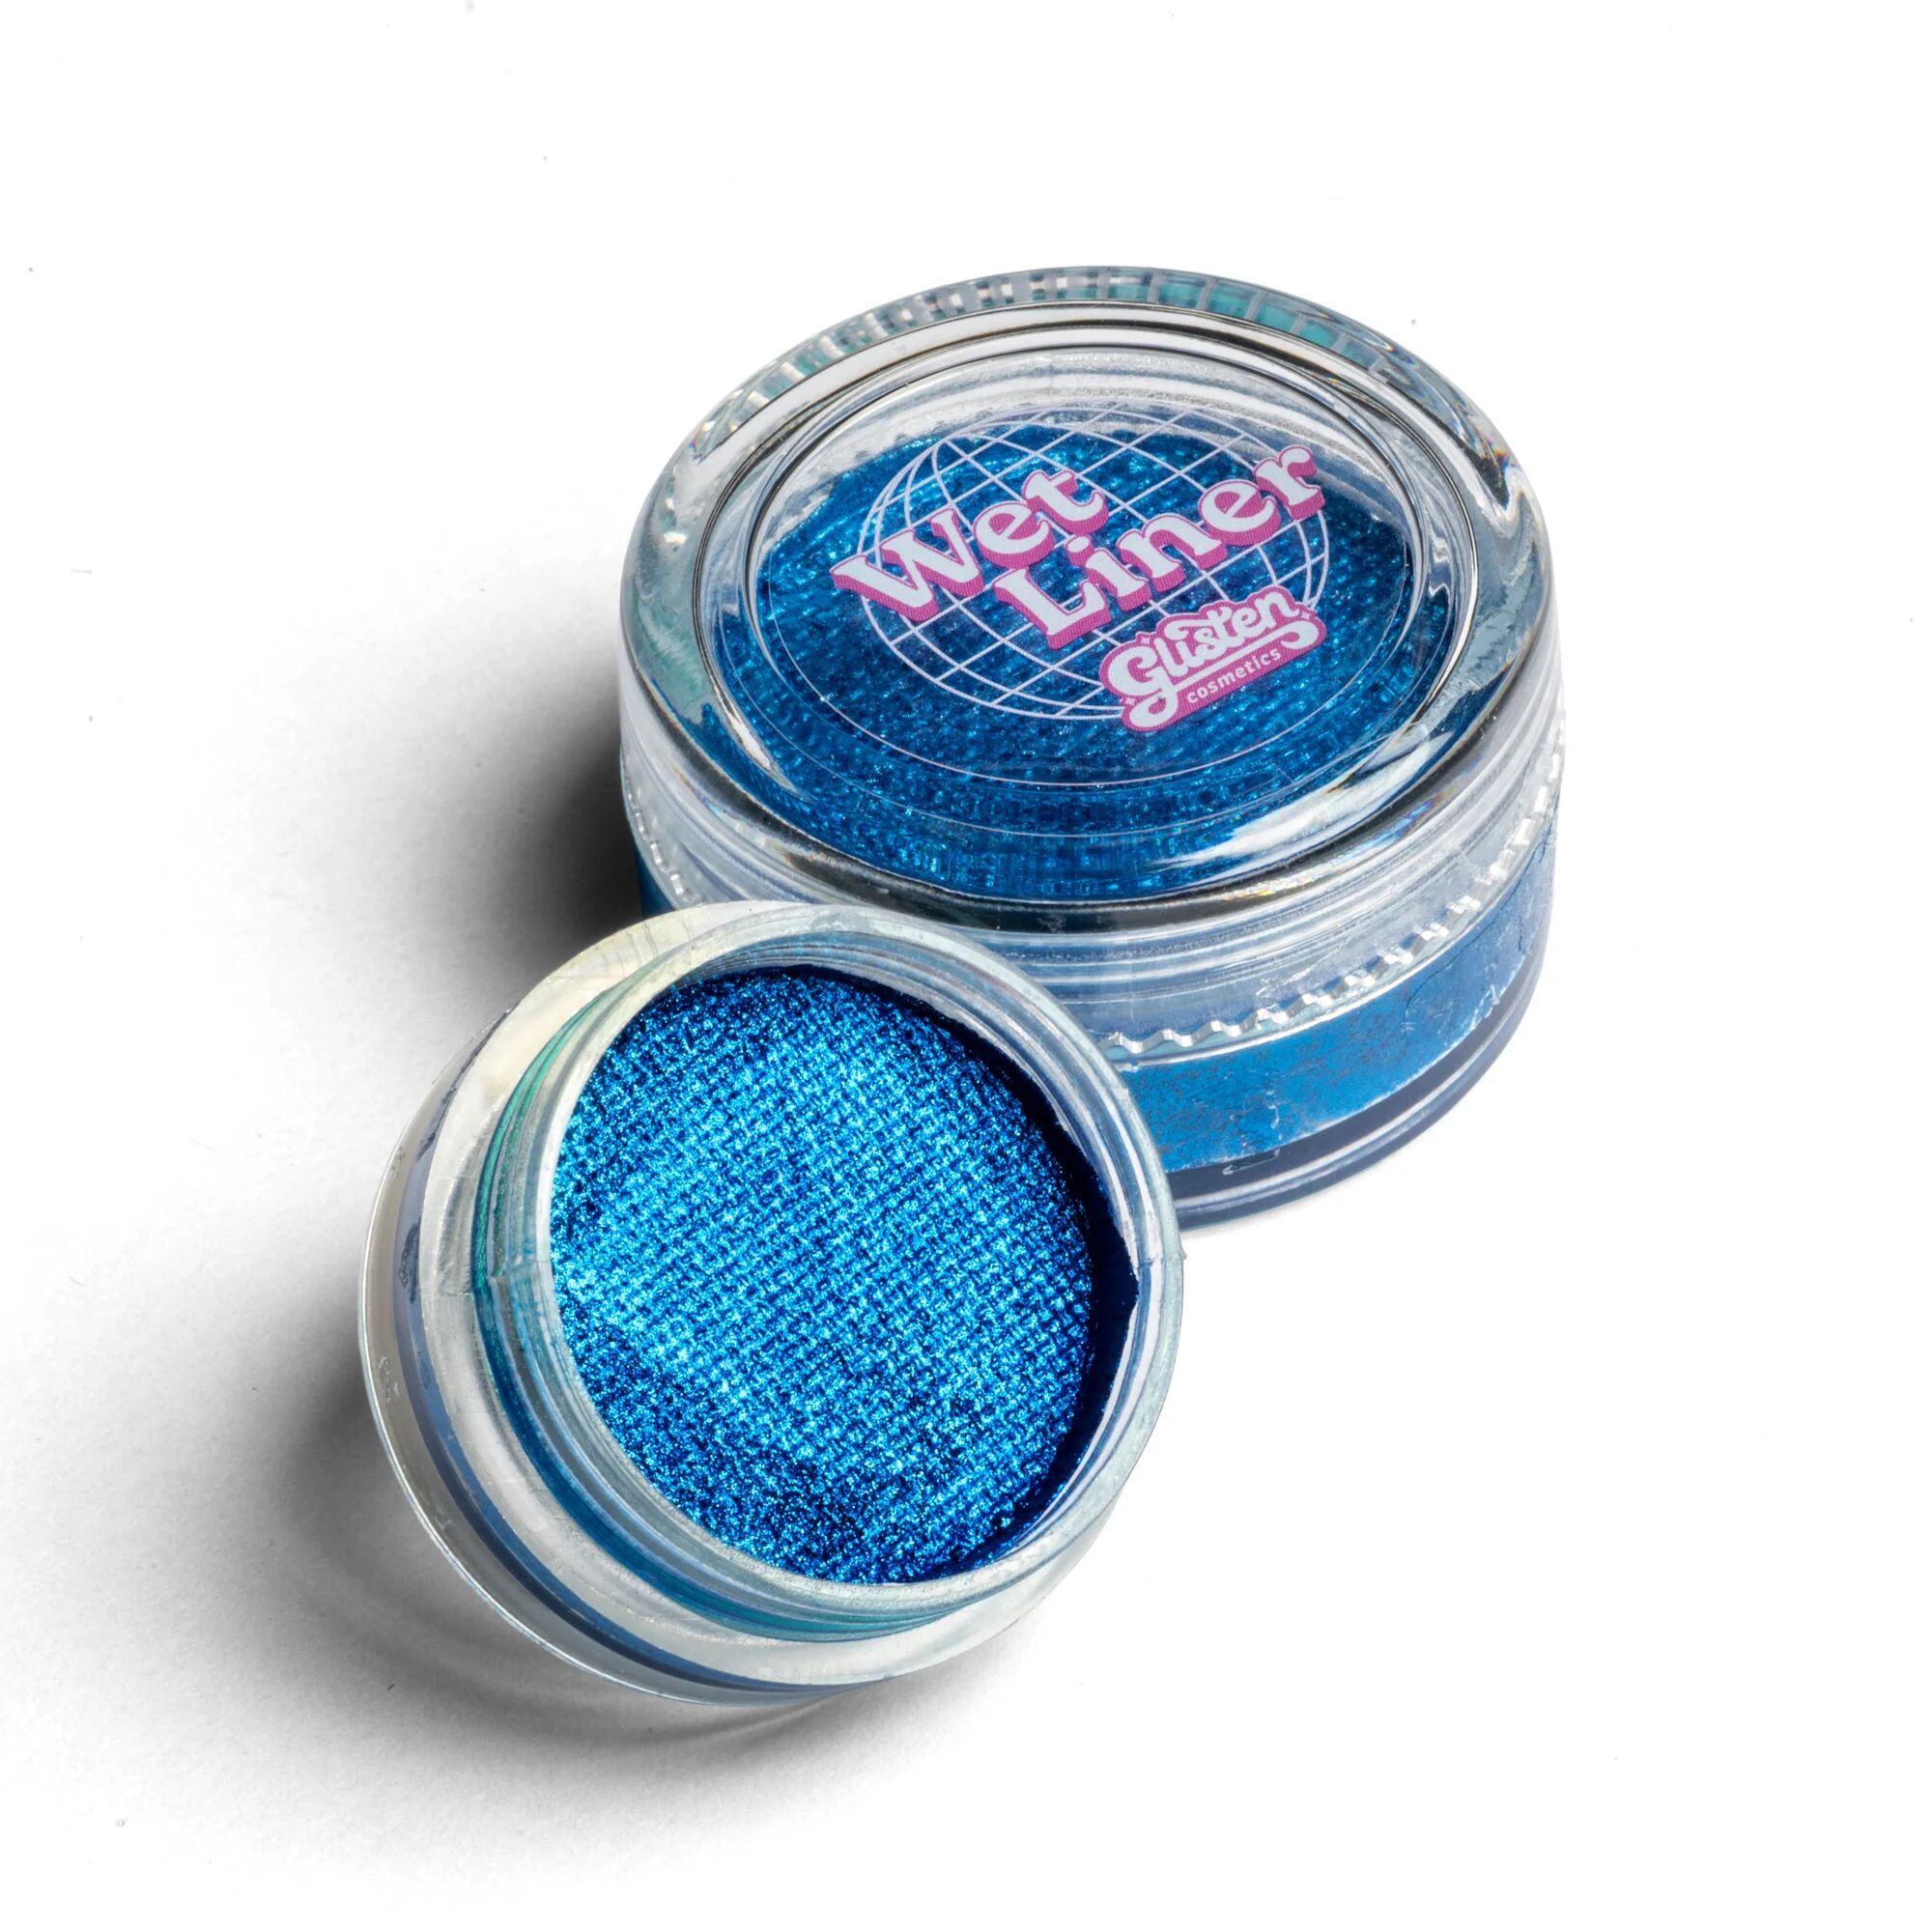 Glisten Cosmetics Moonlight (Dark Blue Metallic) Wet Liner - Eyeliner - Glisten Cosmetic Large - 10g